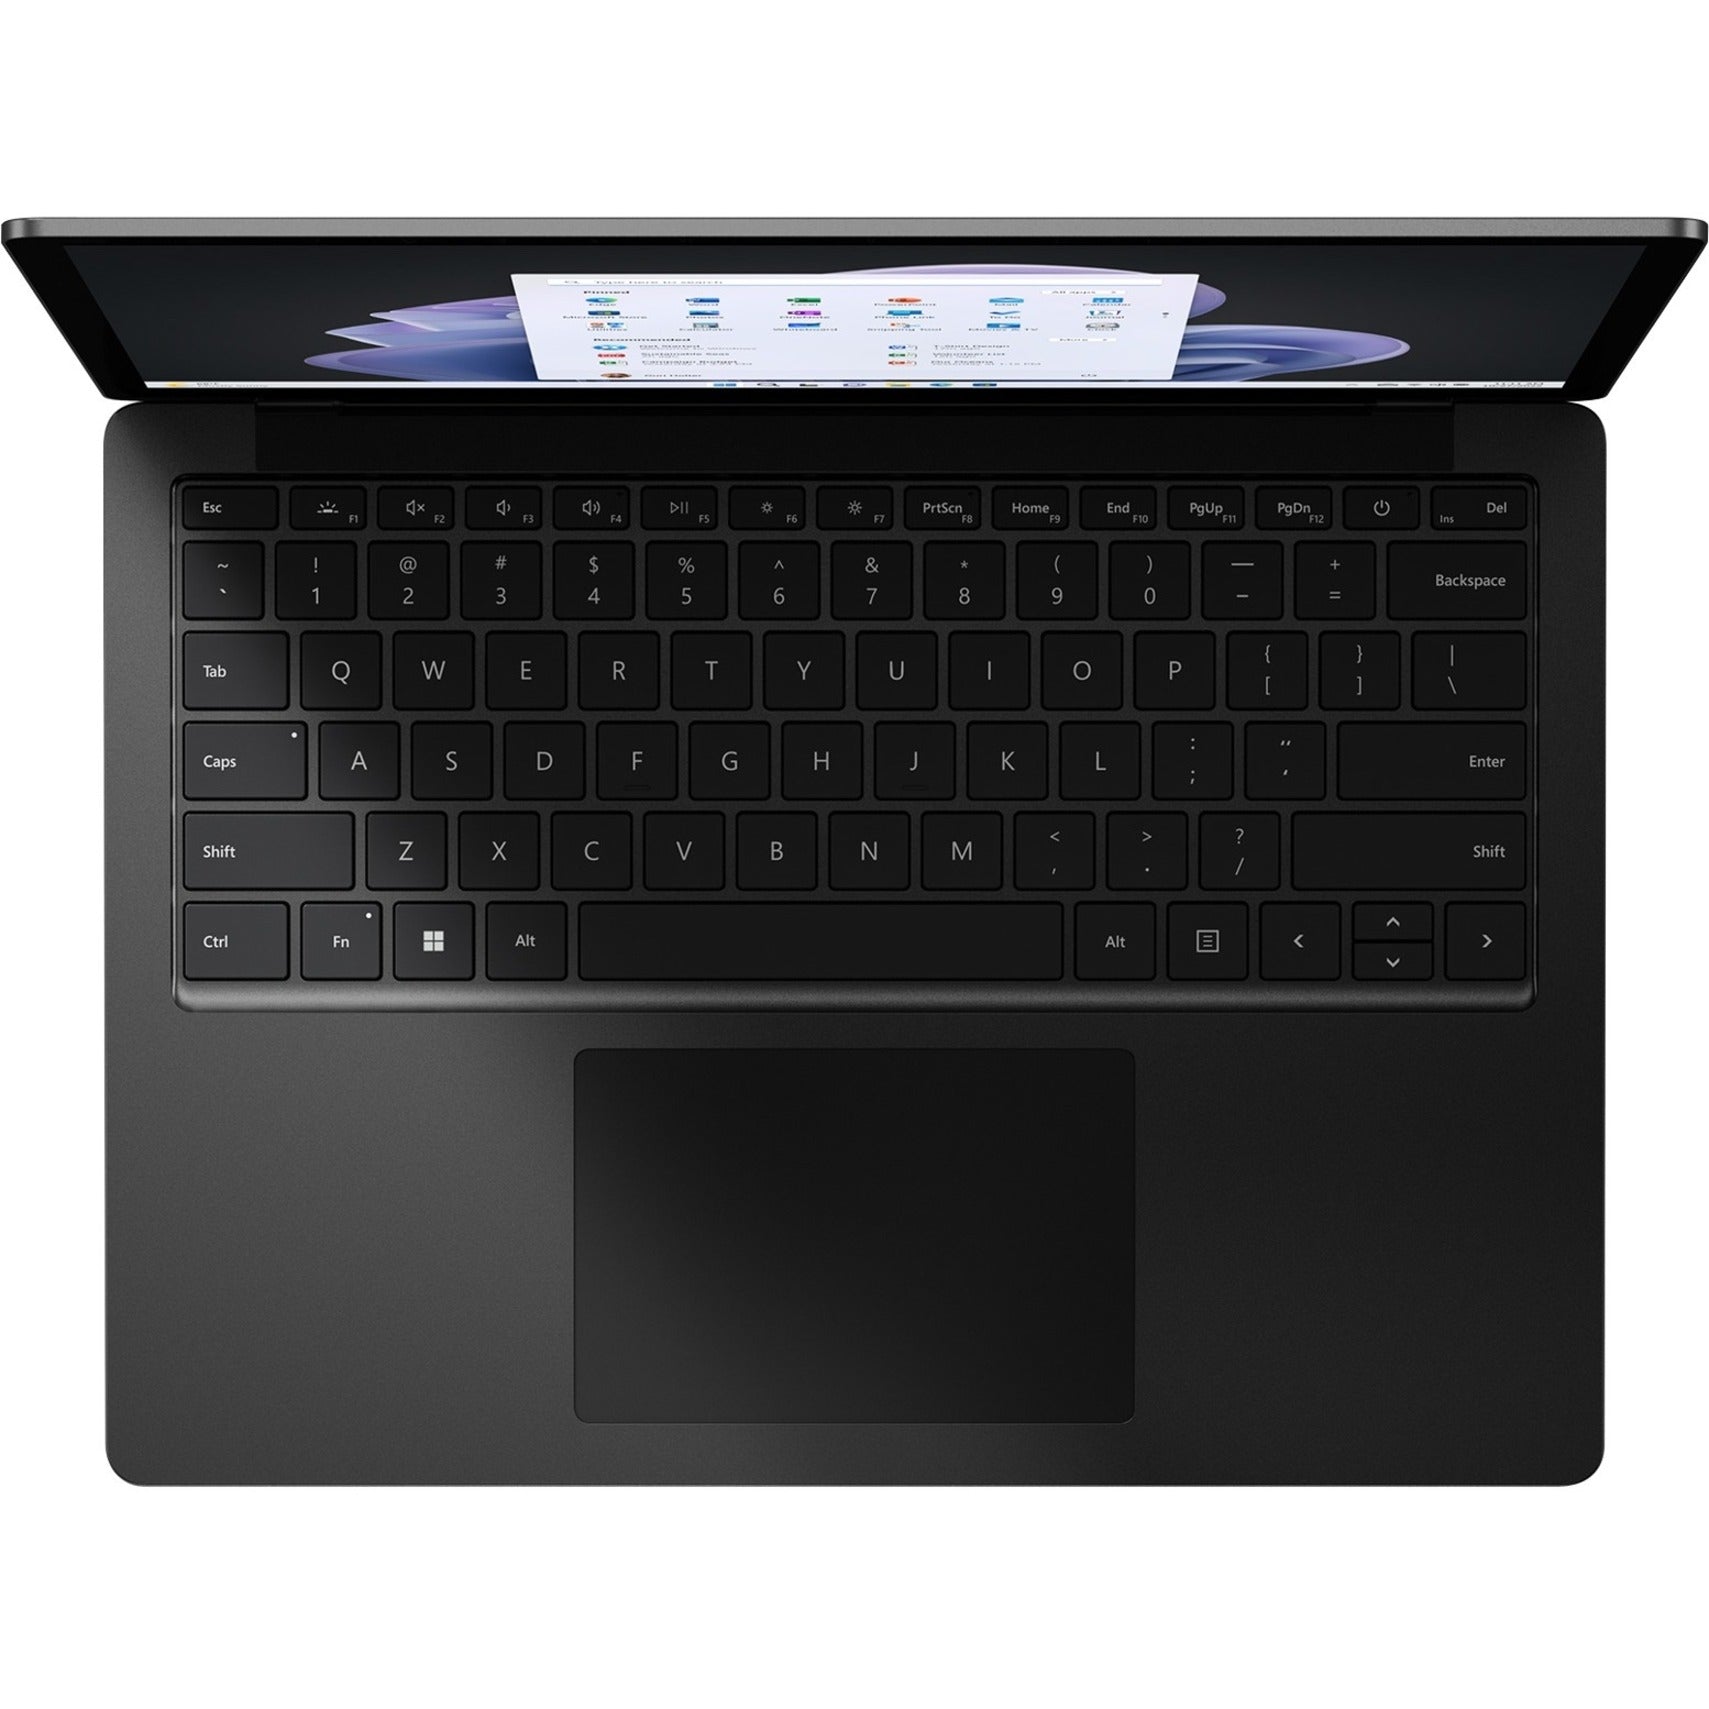 Microsoft R1B-00026 Surface Laptop 5 Notebook, 13.5" Touchscreen, Intel Core i5, 8GB RAM, 256GB SSD, Windows 10 Pro